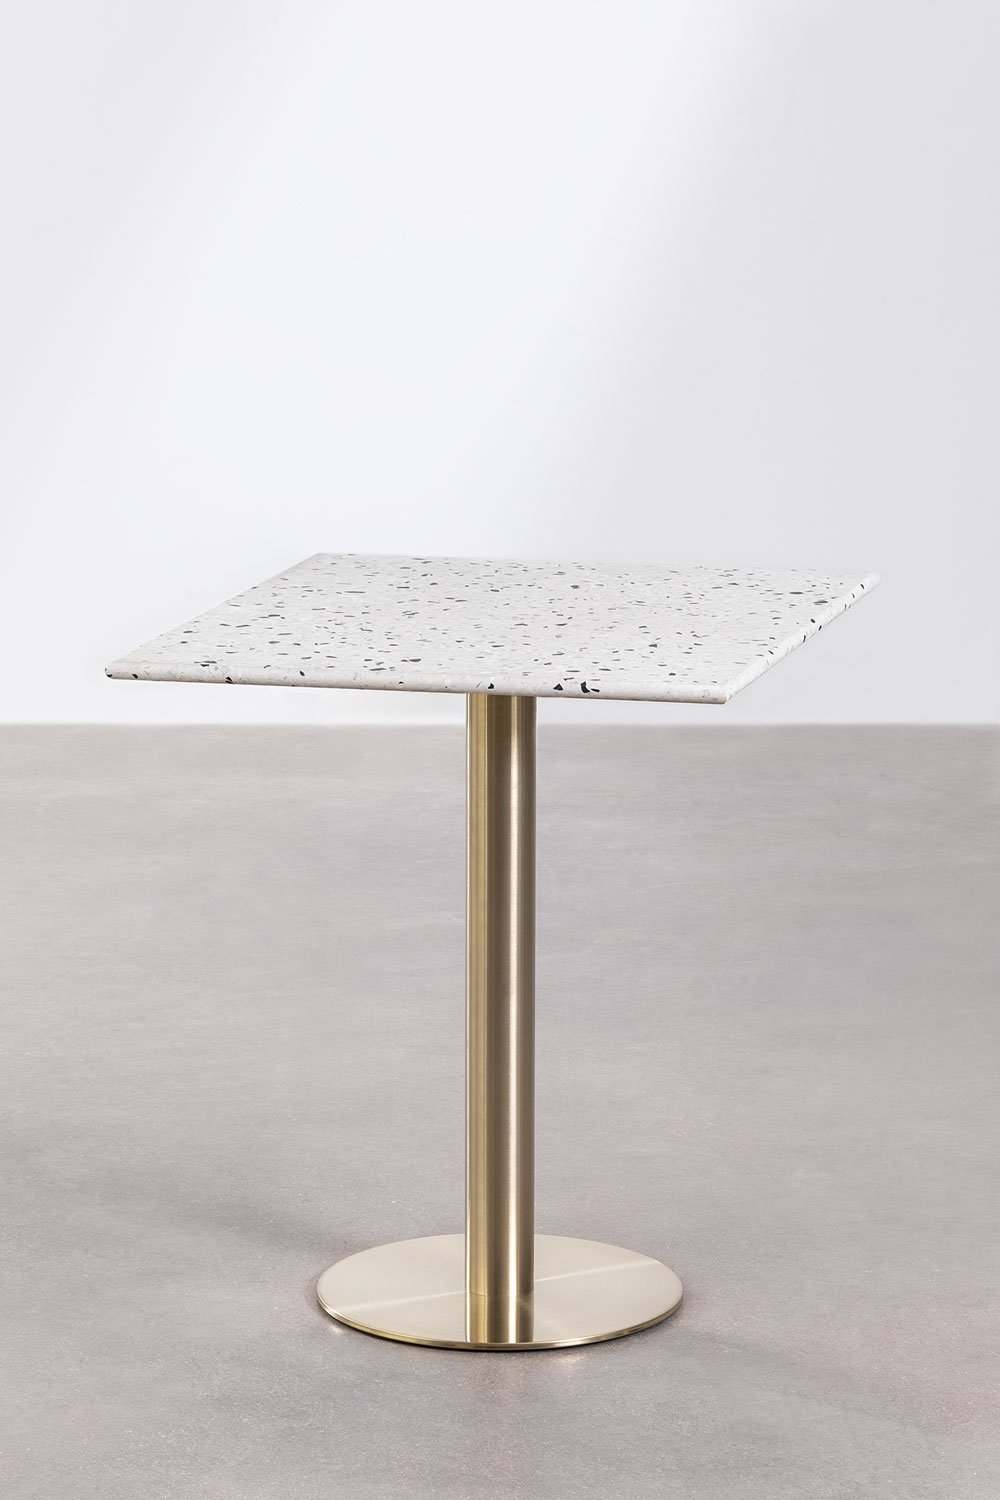 Table de Bar Carrée en Terrazzo (60x60 cm) Malibu, image de la galerie 1